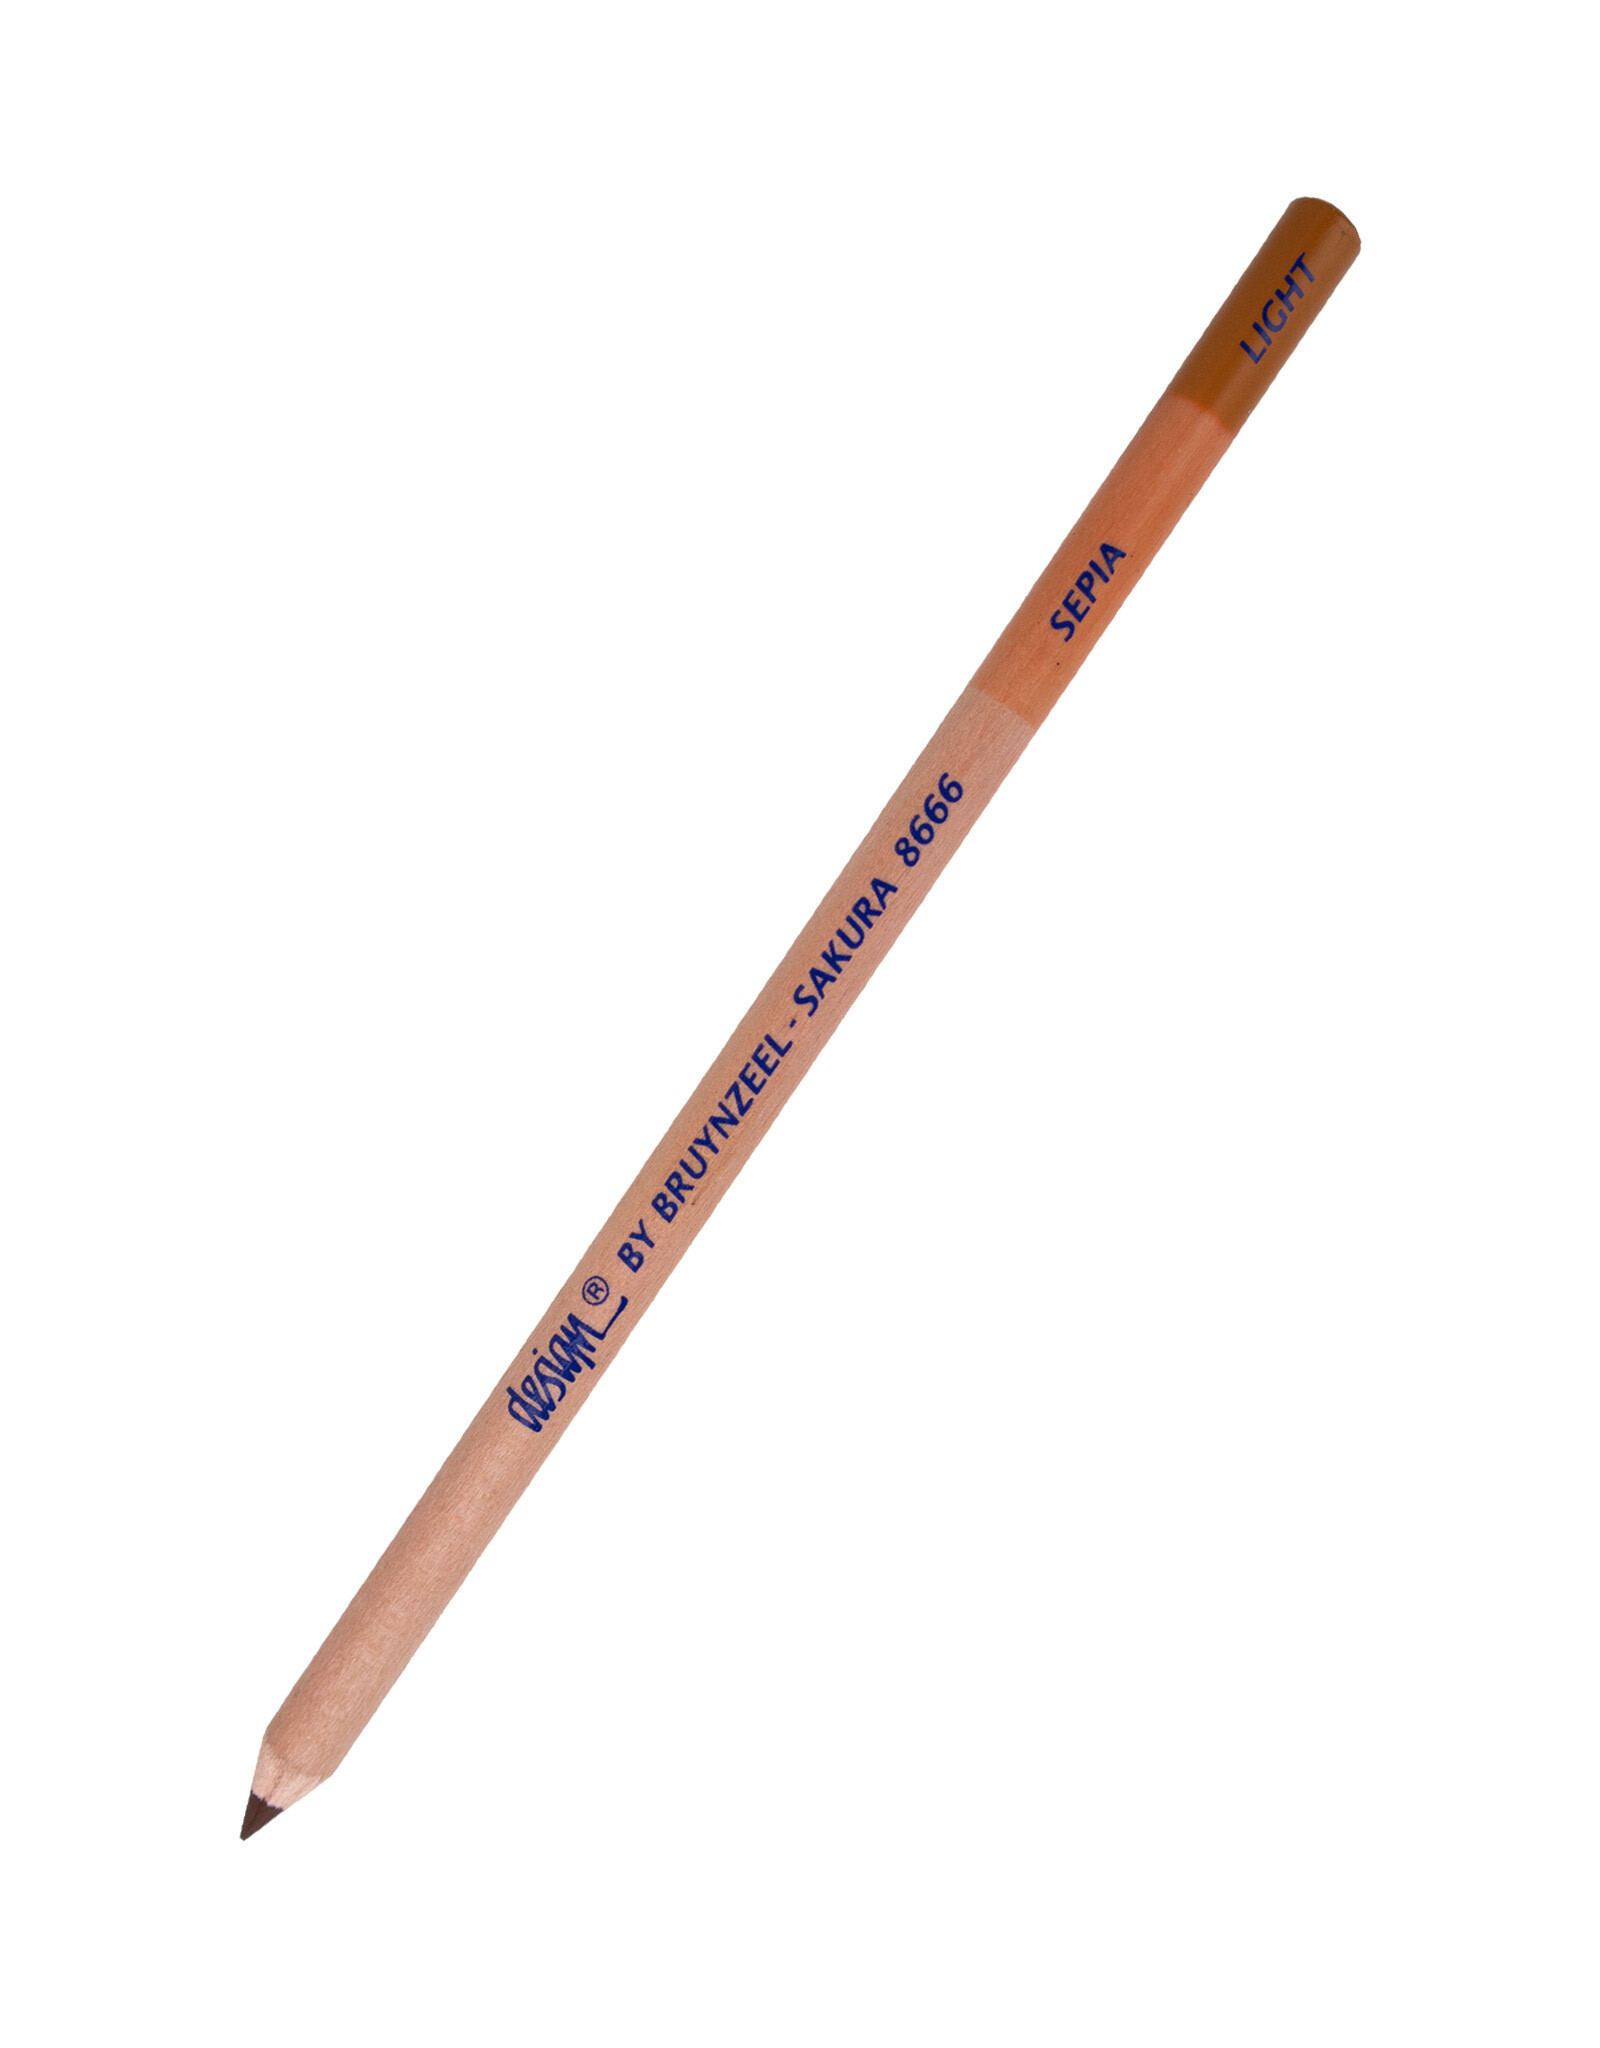 Royal Talens Bruynzeel Design Pencil, Sepia